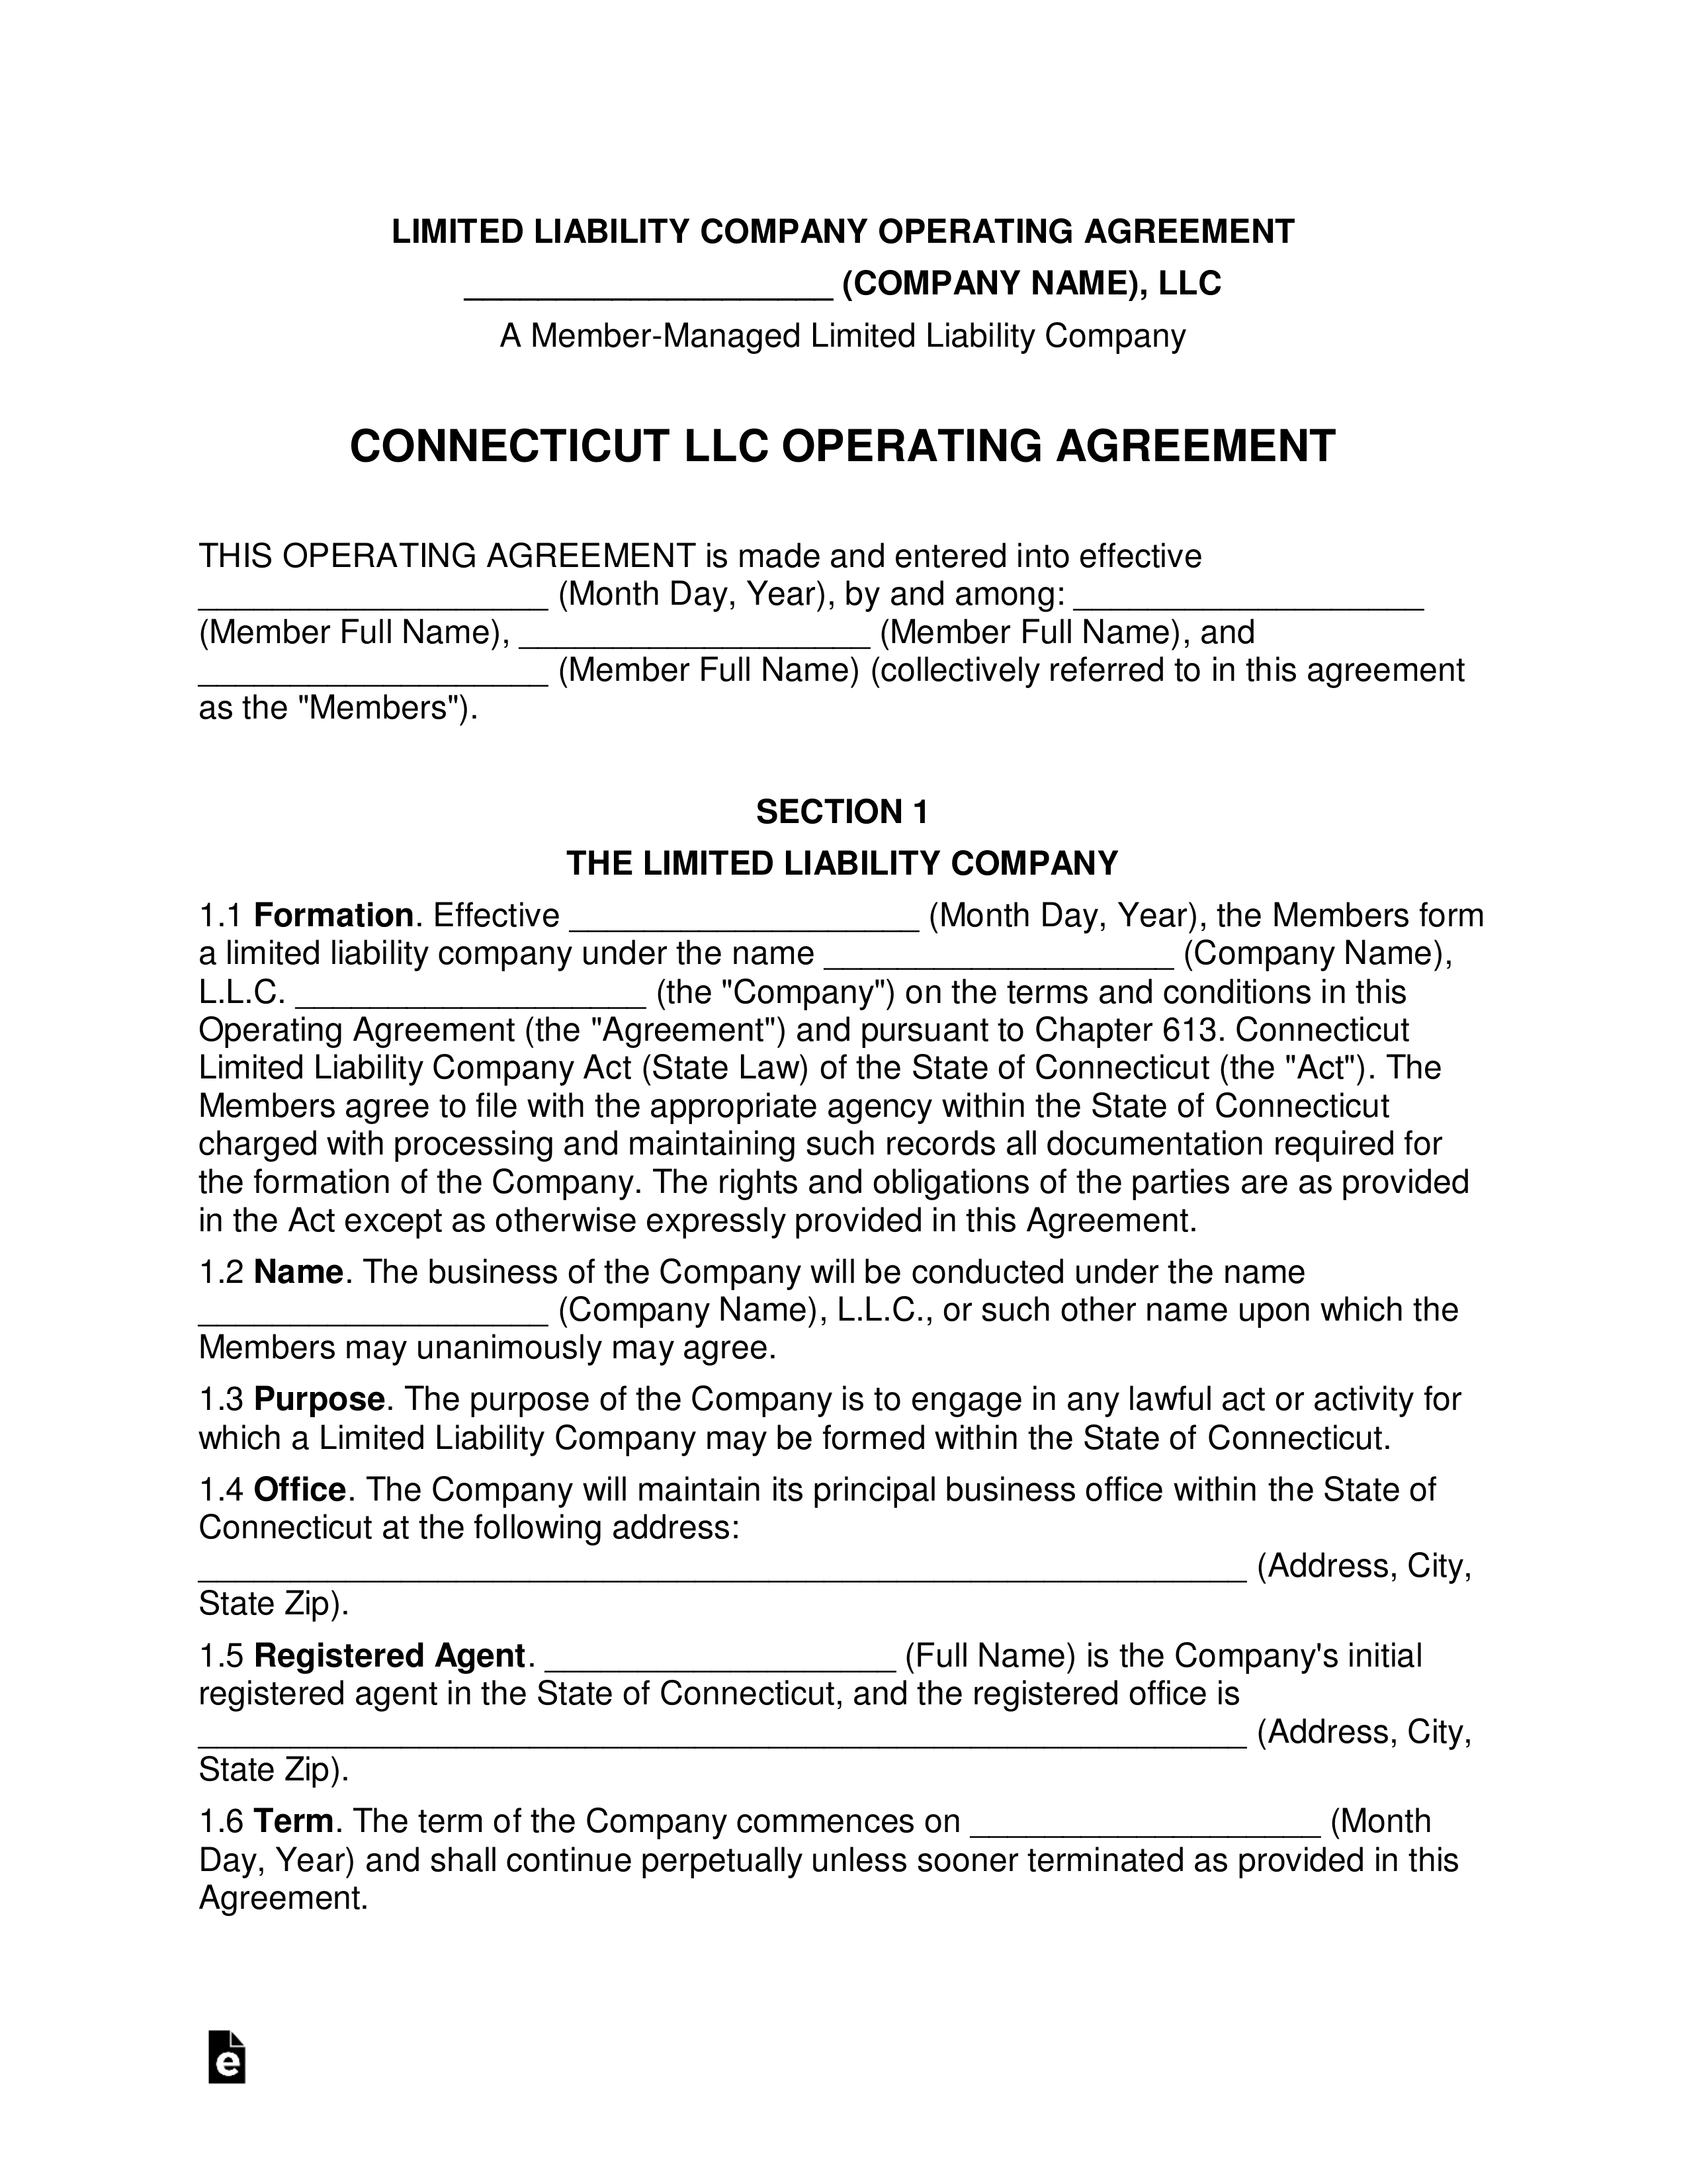 Connecticut Multi-Member LLC Operating Agreement Form